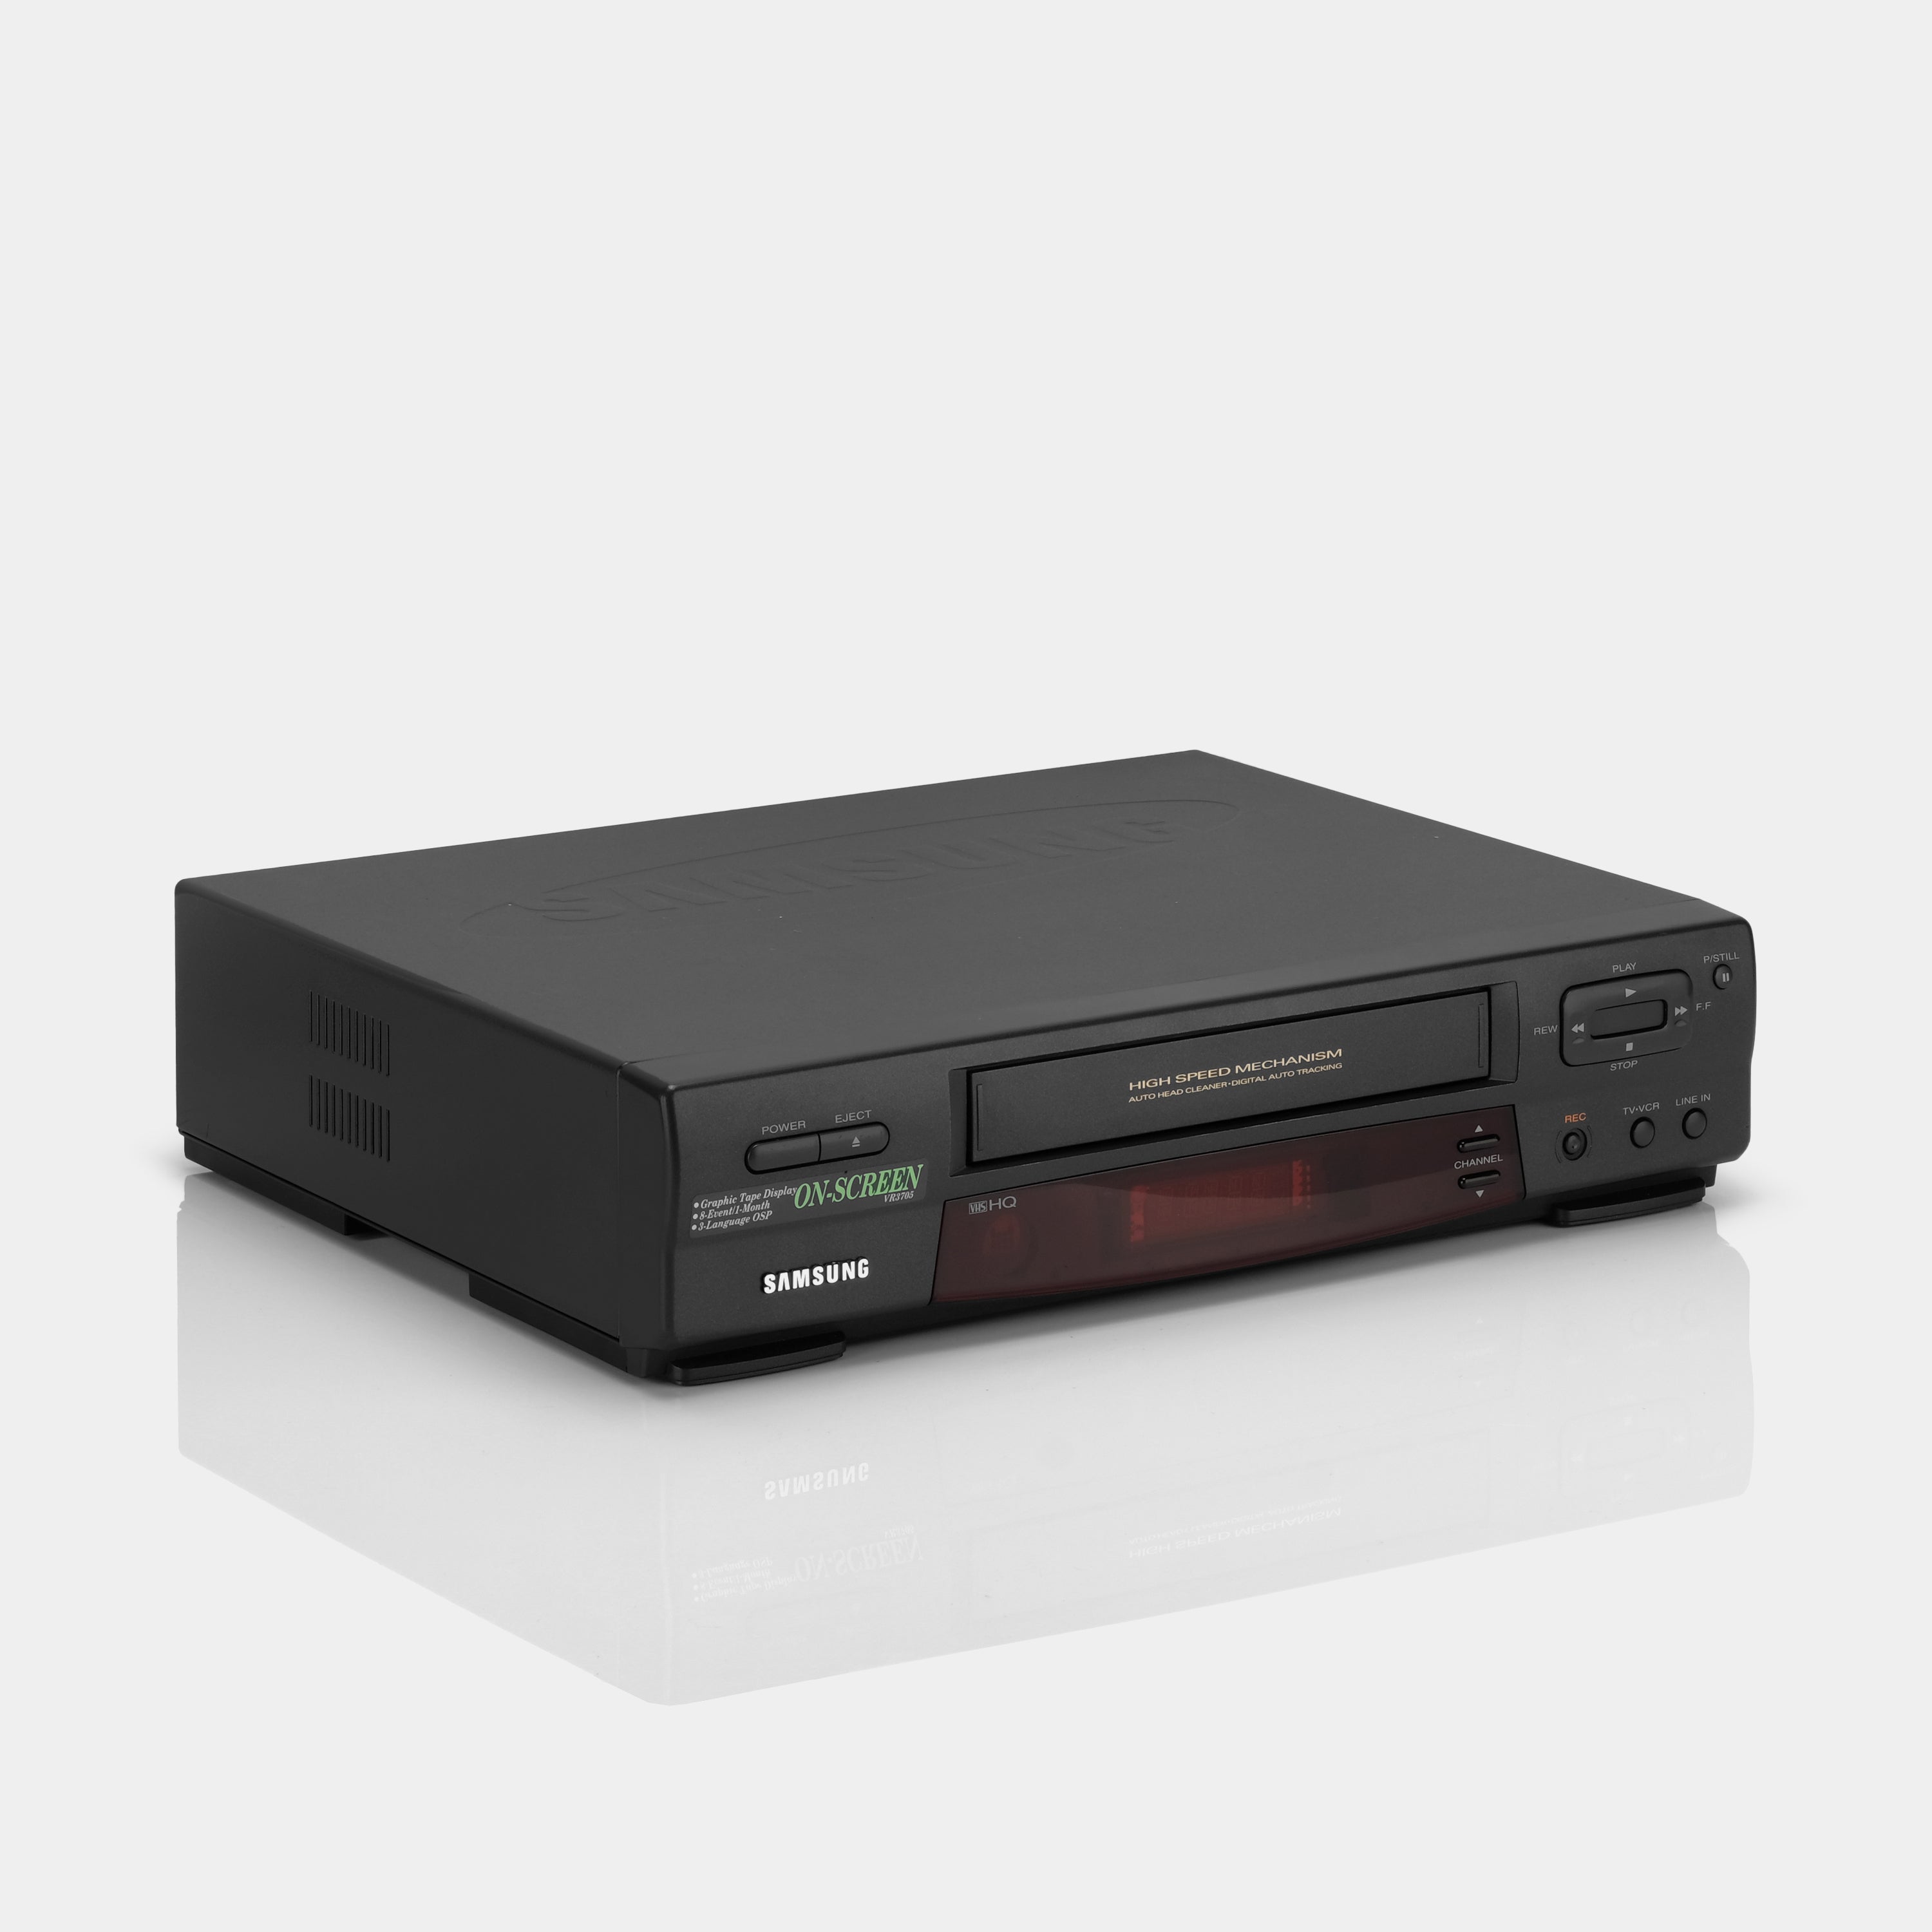 Samsung VR3705 VCR VHS Player